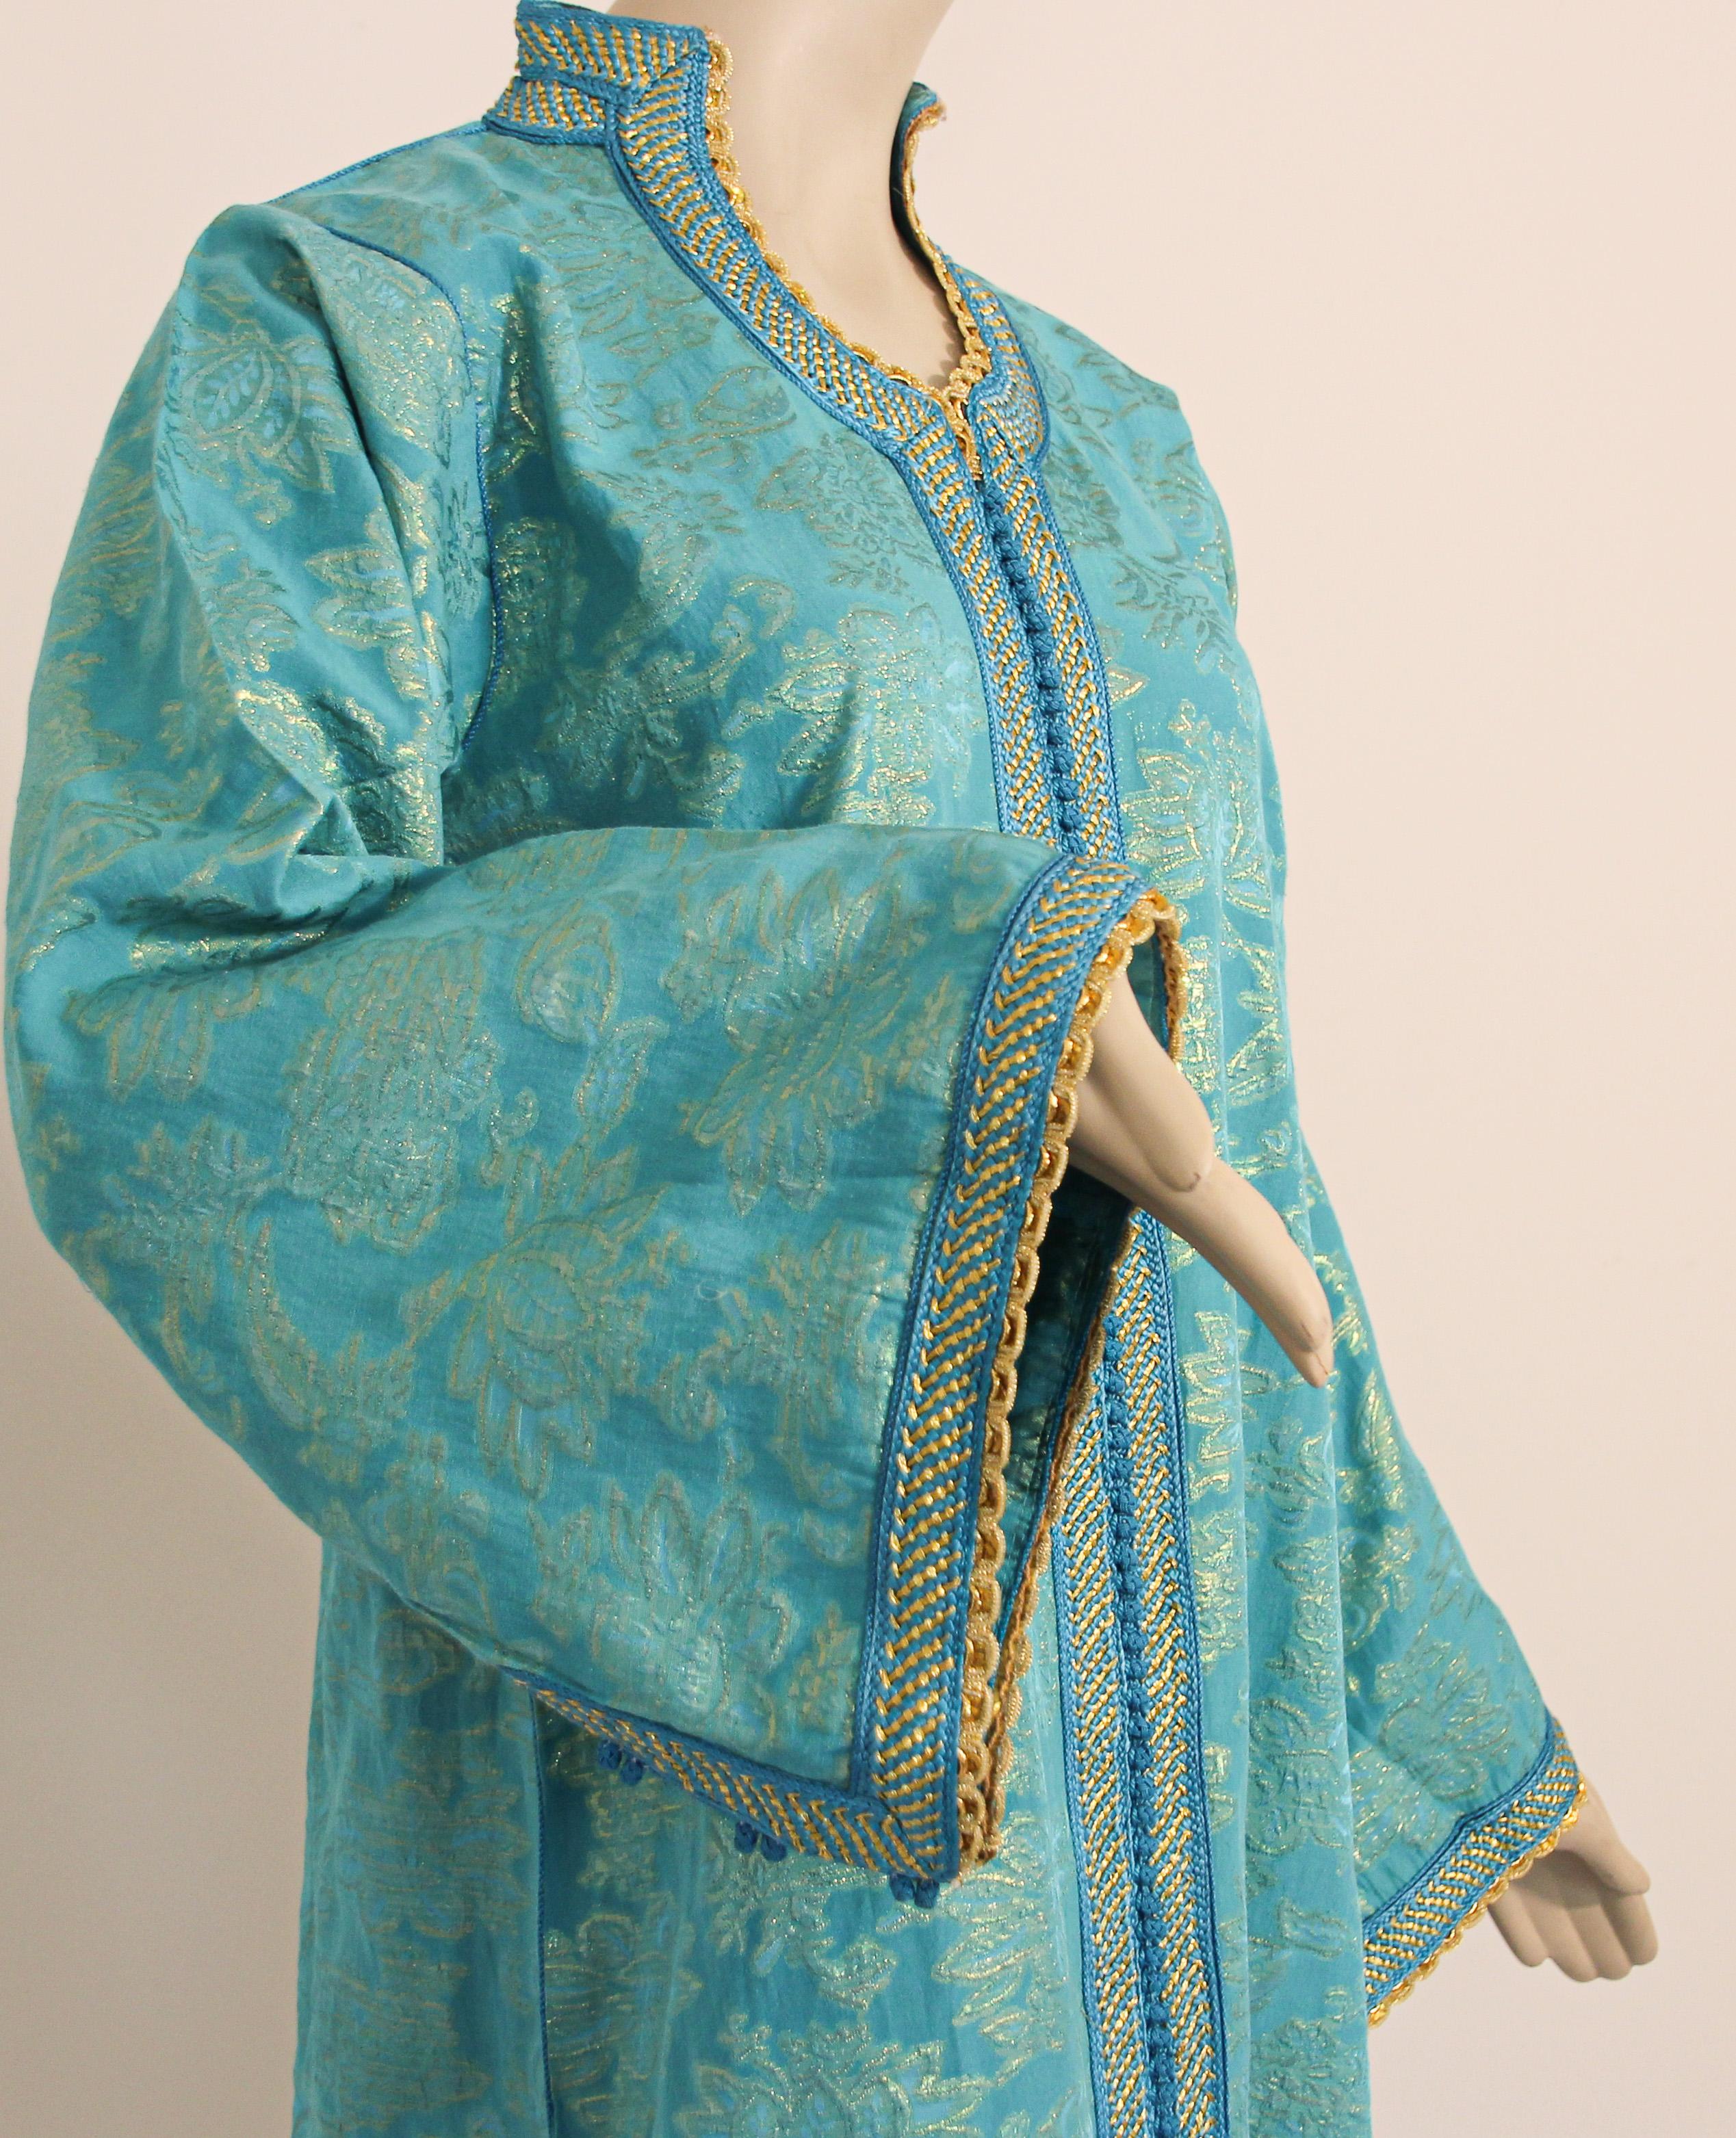 Embroidered Elegant Moroccan Caftan Turquoise Metallic Floral Brocade